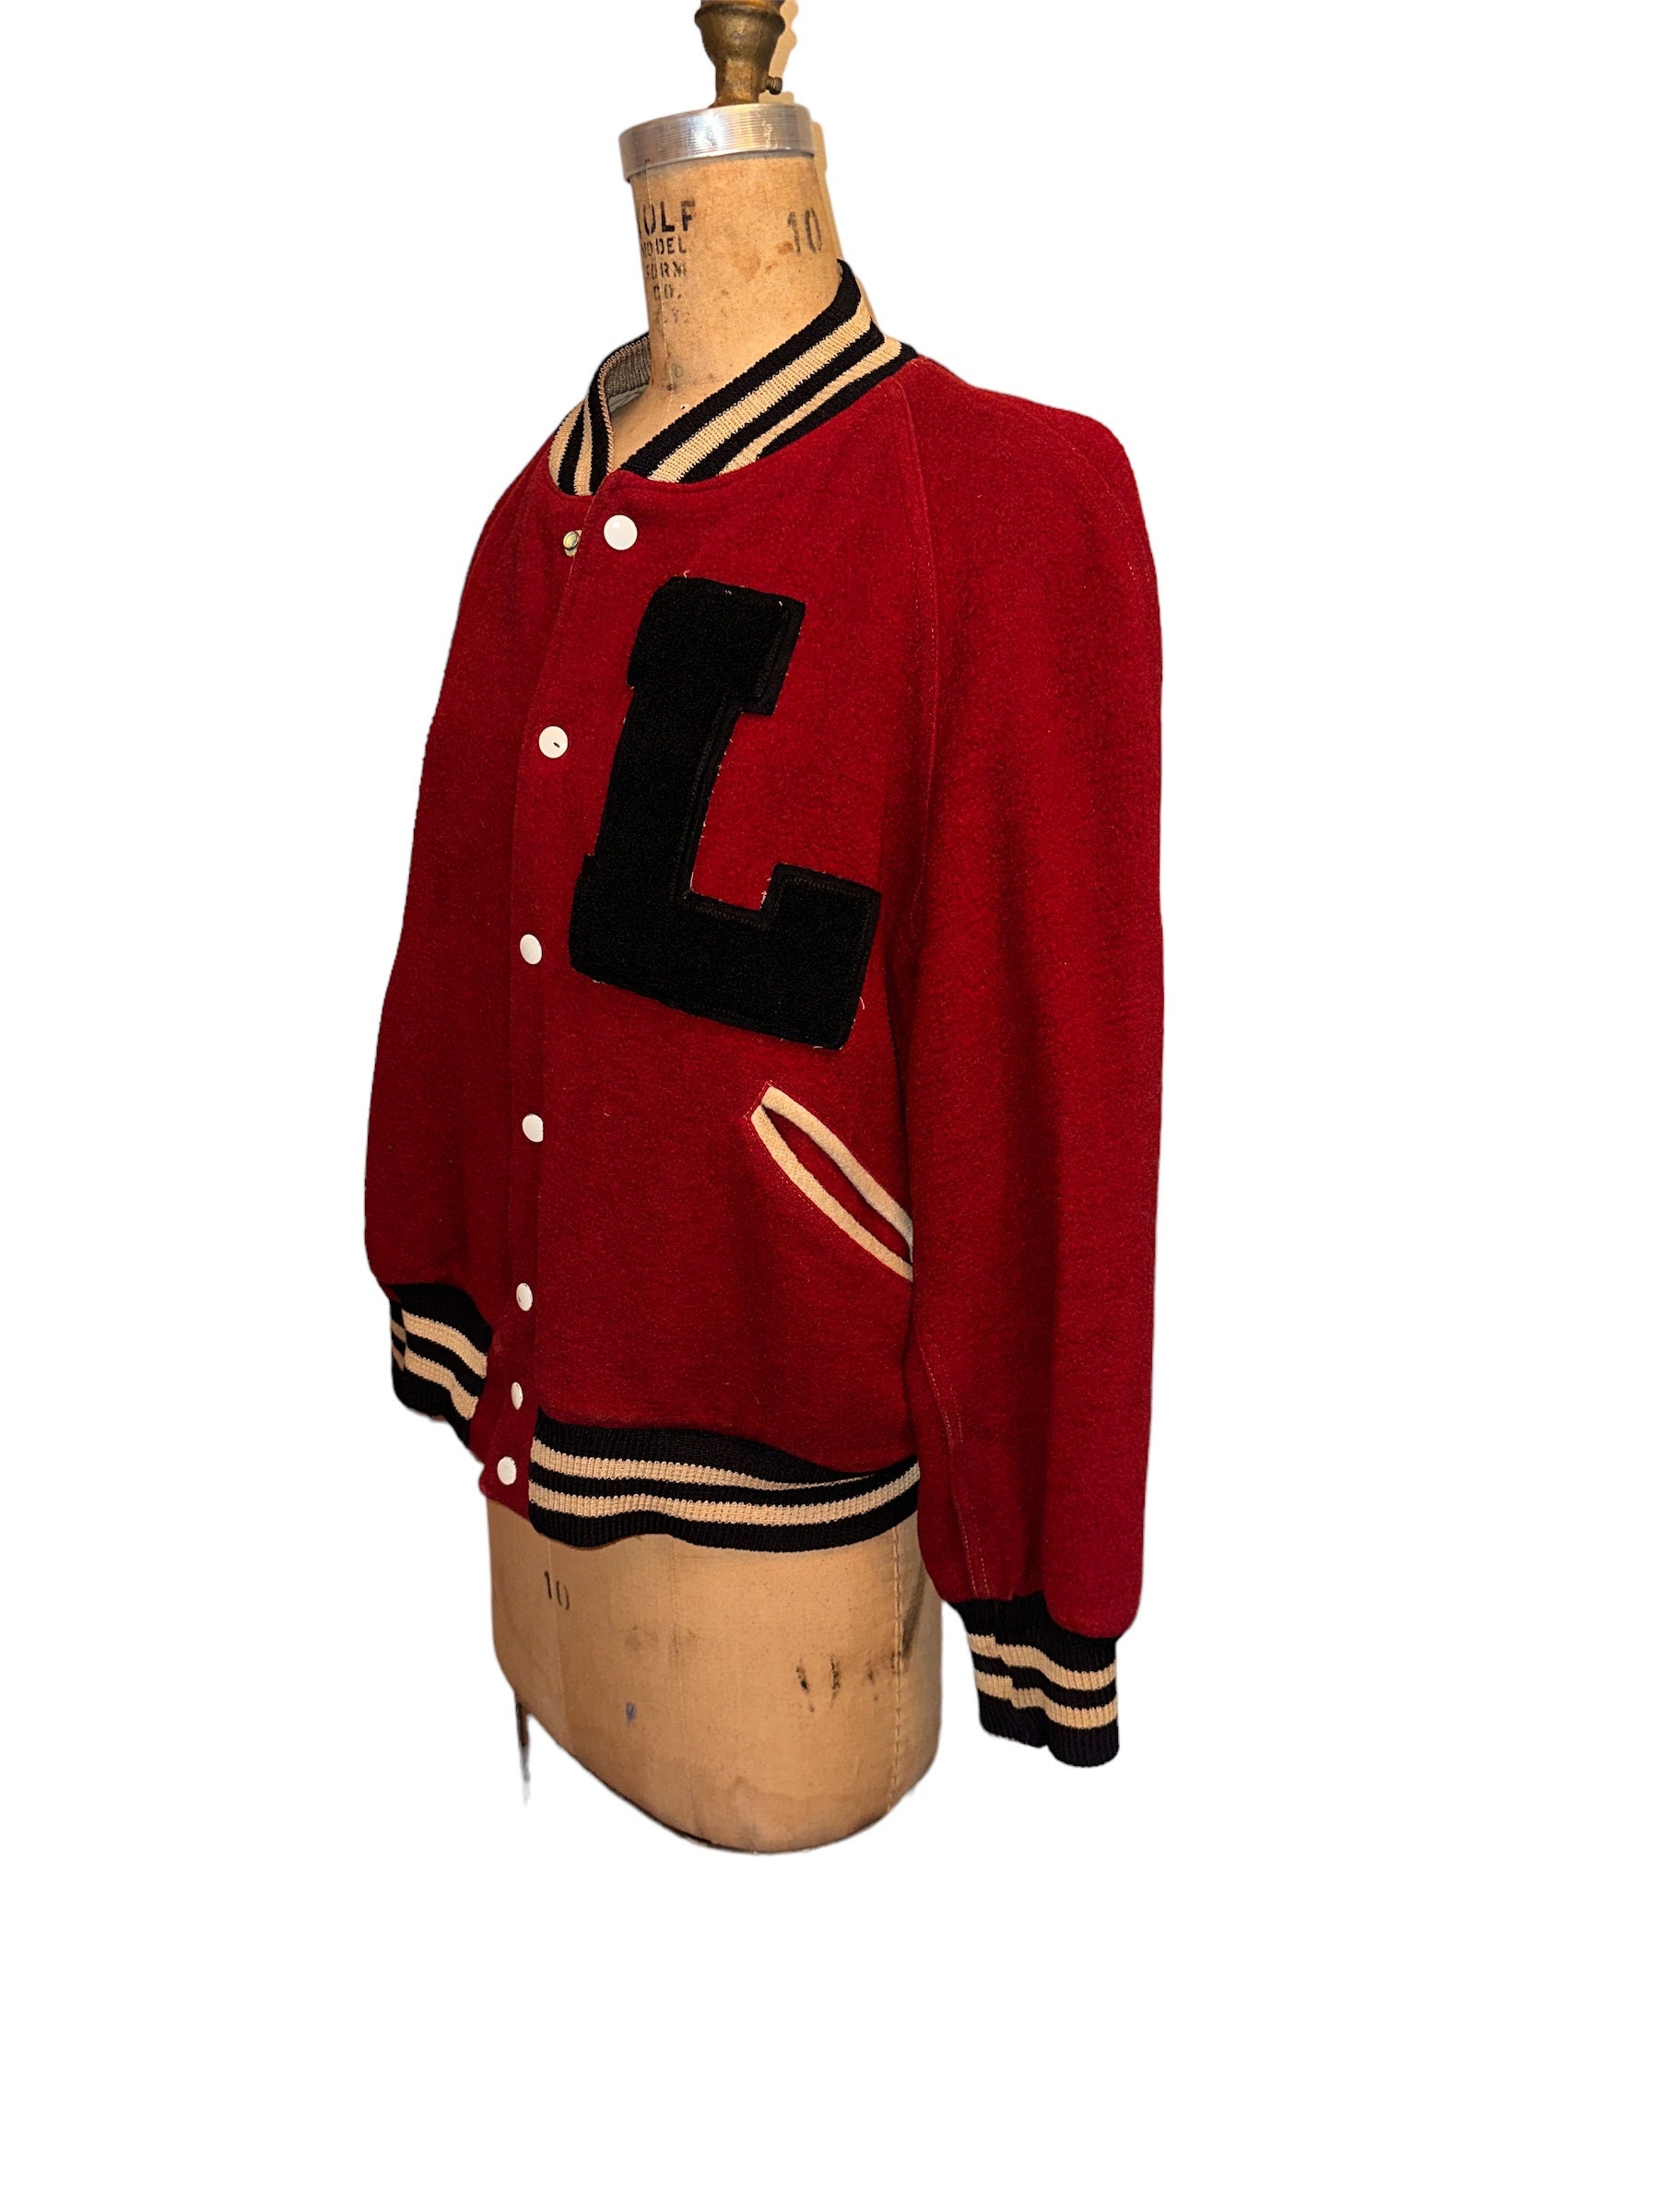 NCAA Team Louisville Cardinals Letterman Varsity Jacket - Maker of Jacket